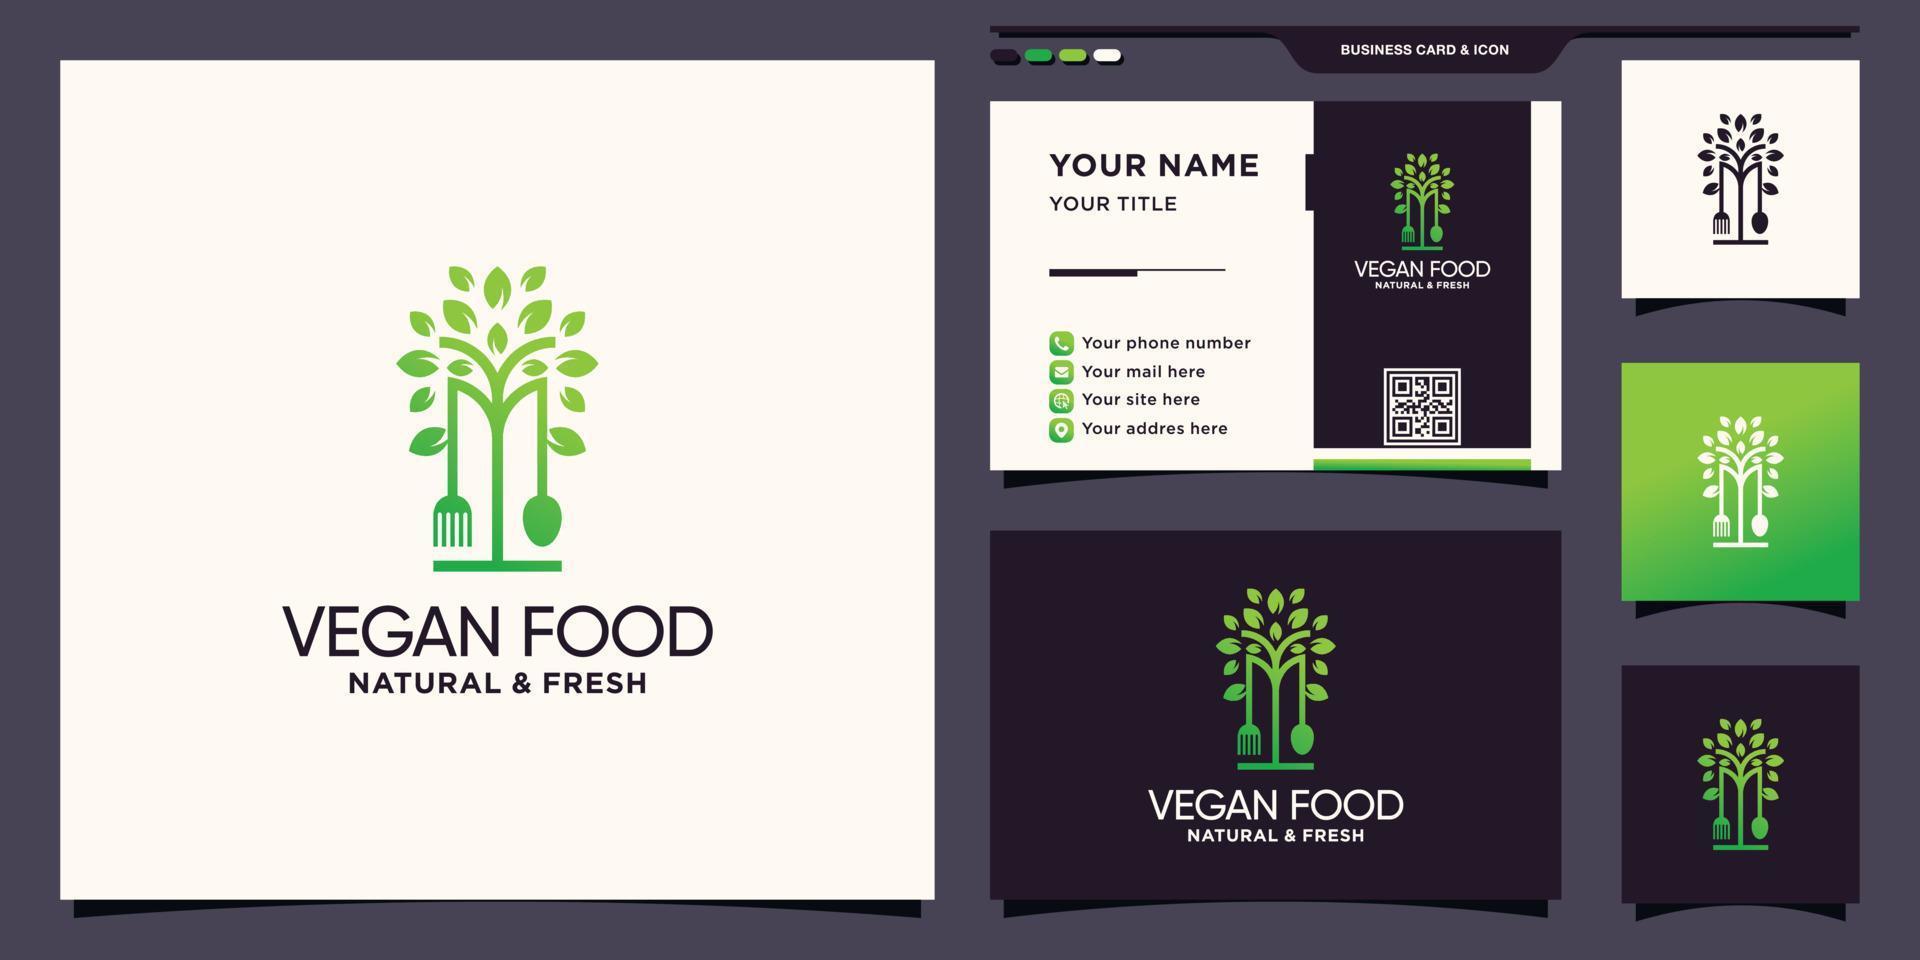 Logo-Inspiration für vegane Lebensmittel mit einzigartigem modernem Konzept und Visitenkarten-Design Premium-Vektor vektor